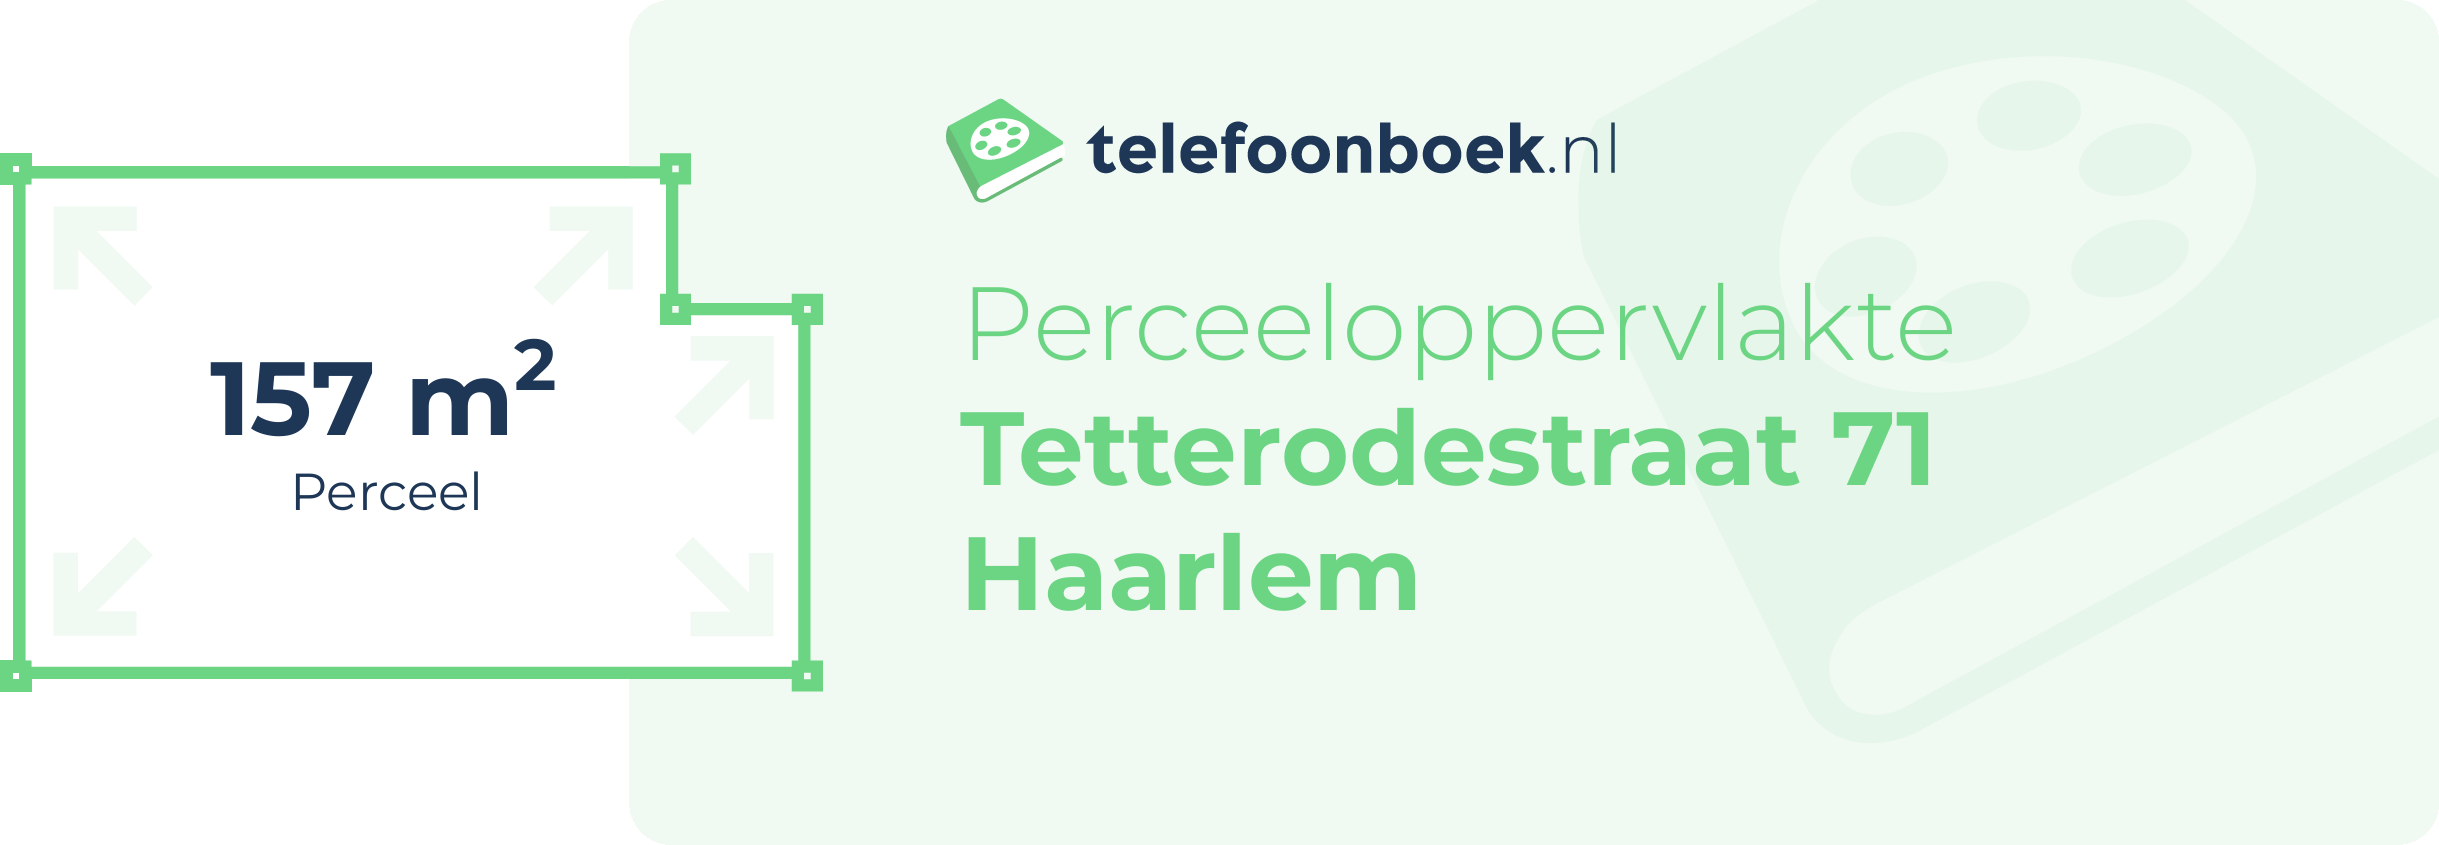 Perceeloppervlakte Tetterodestraat 71 Haarlem